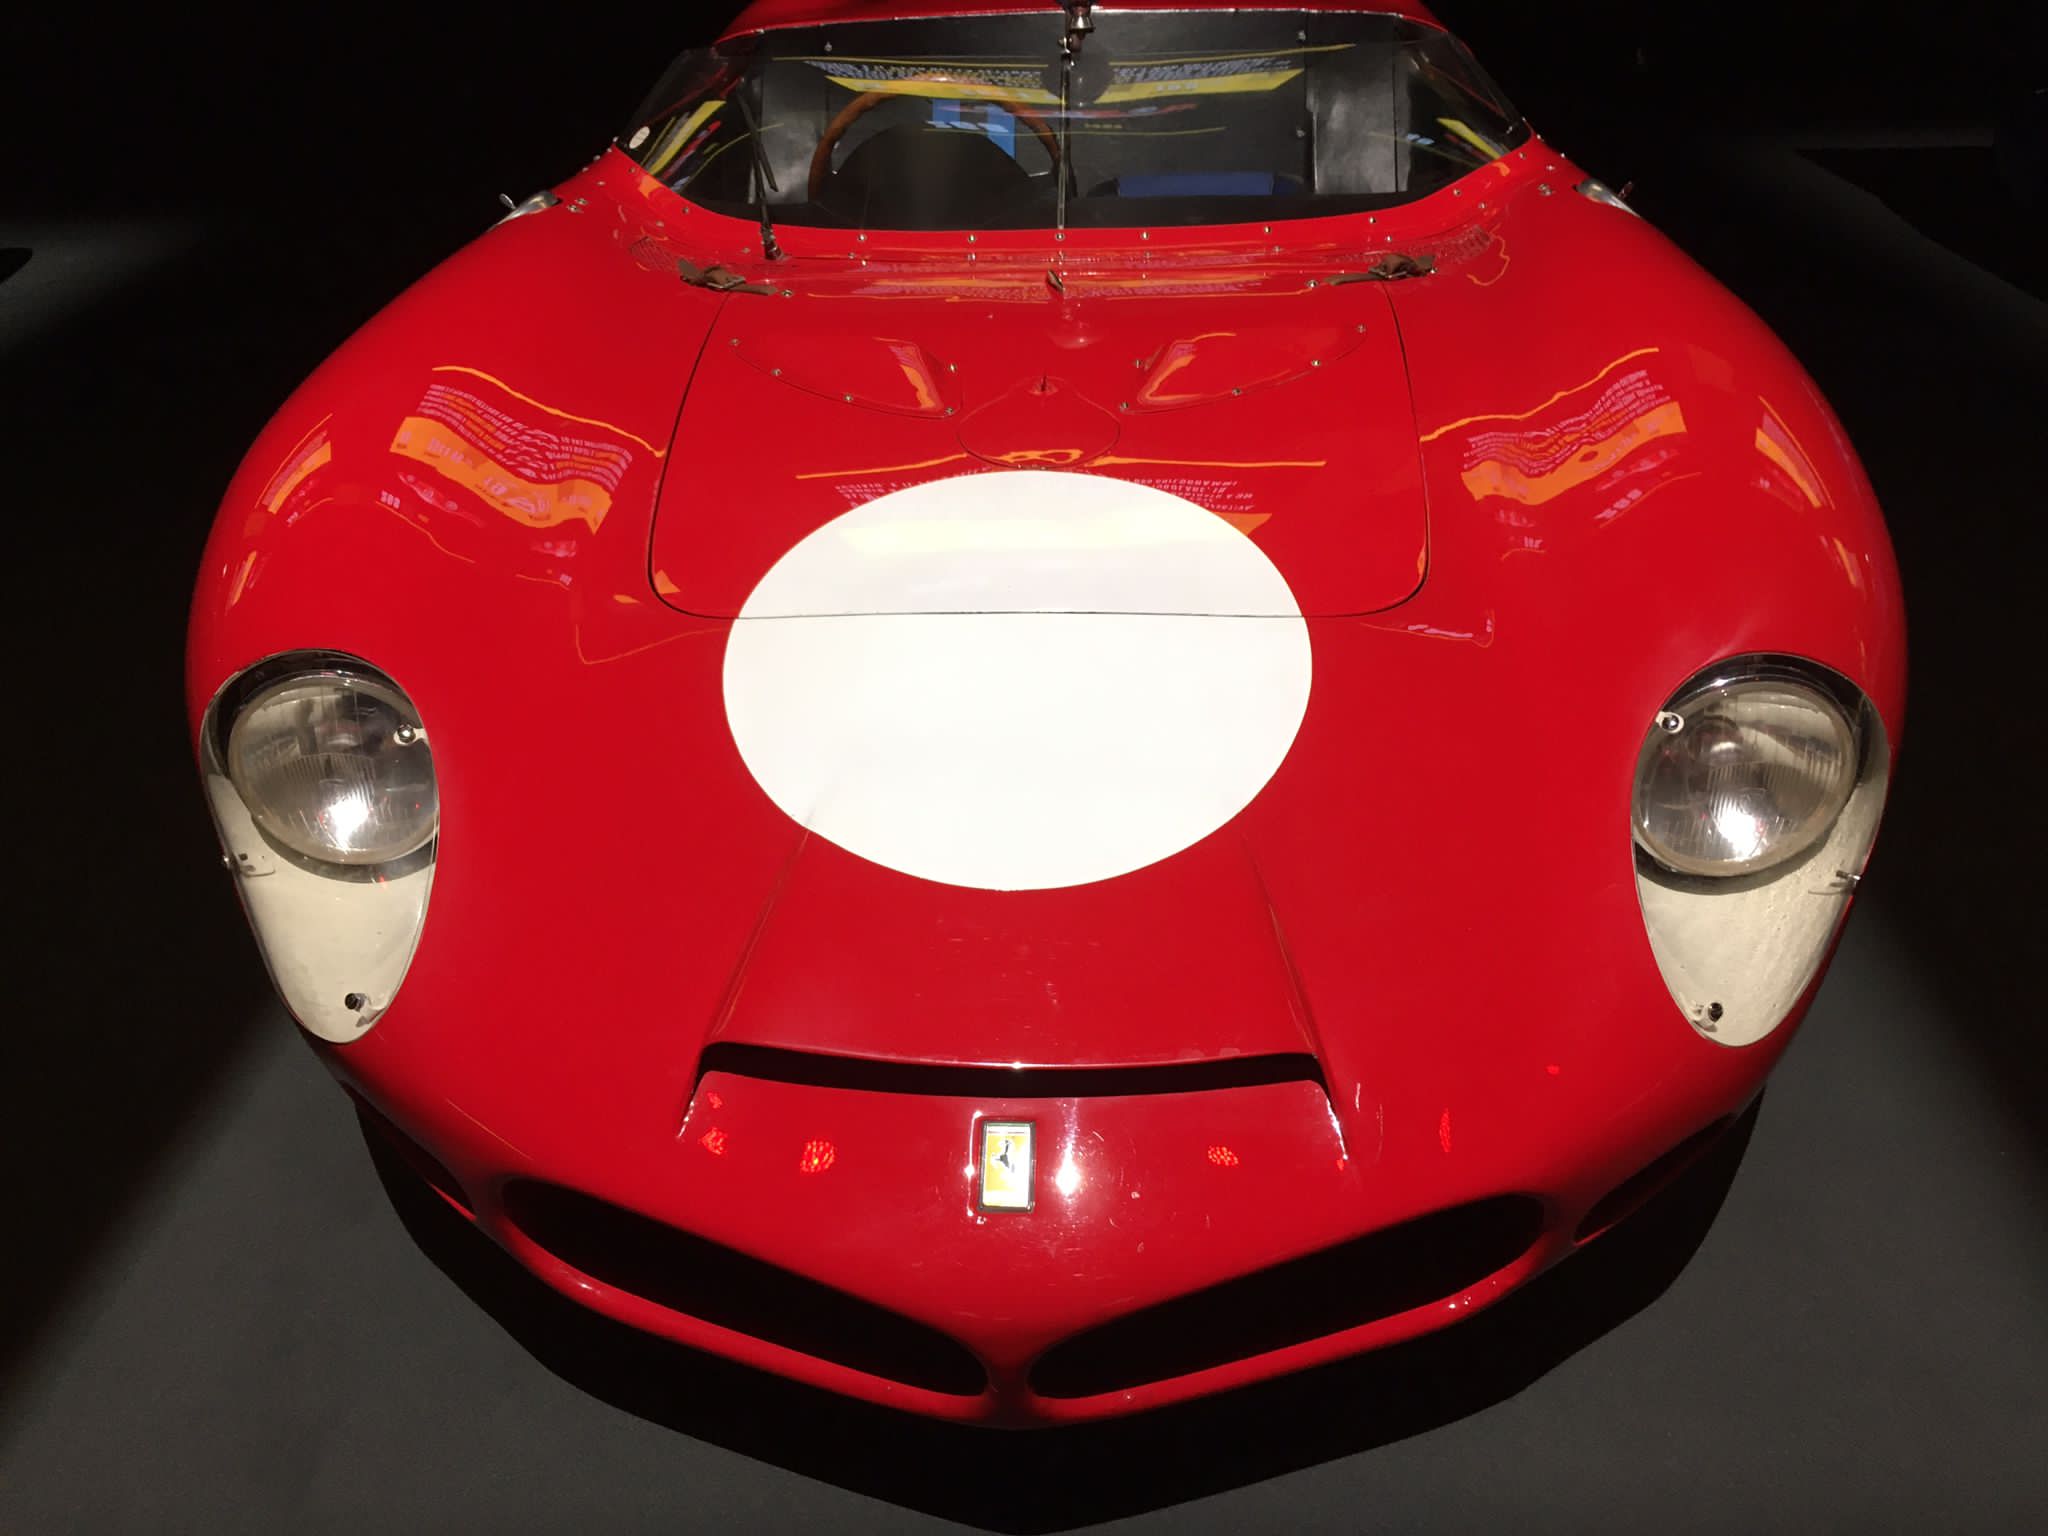 A vintage red Ferrari.